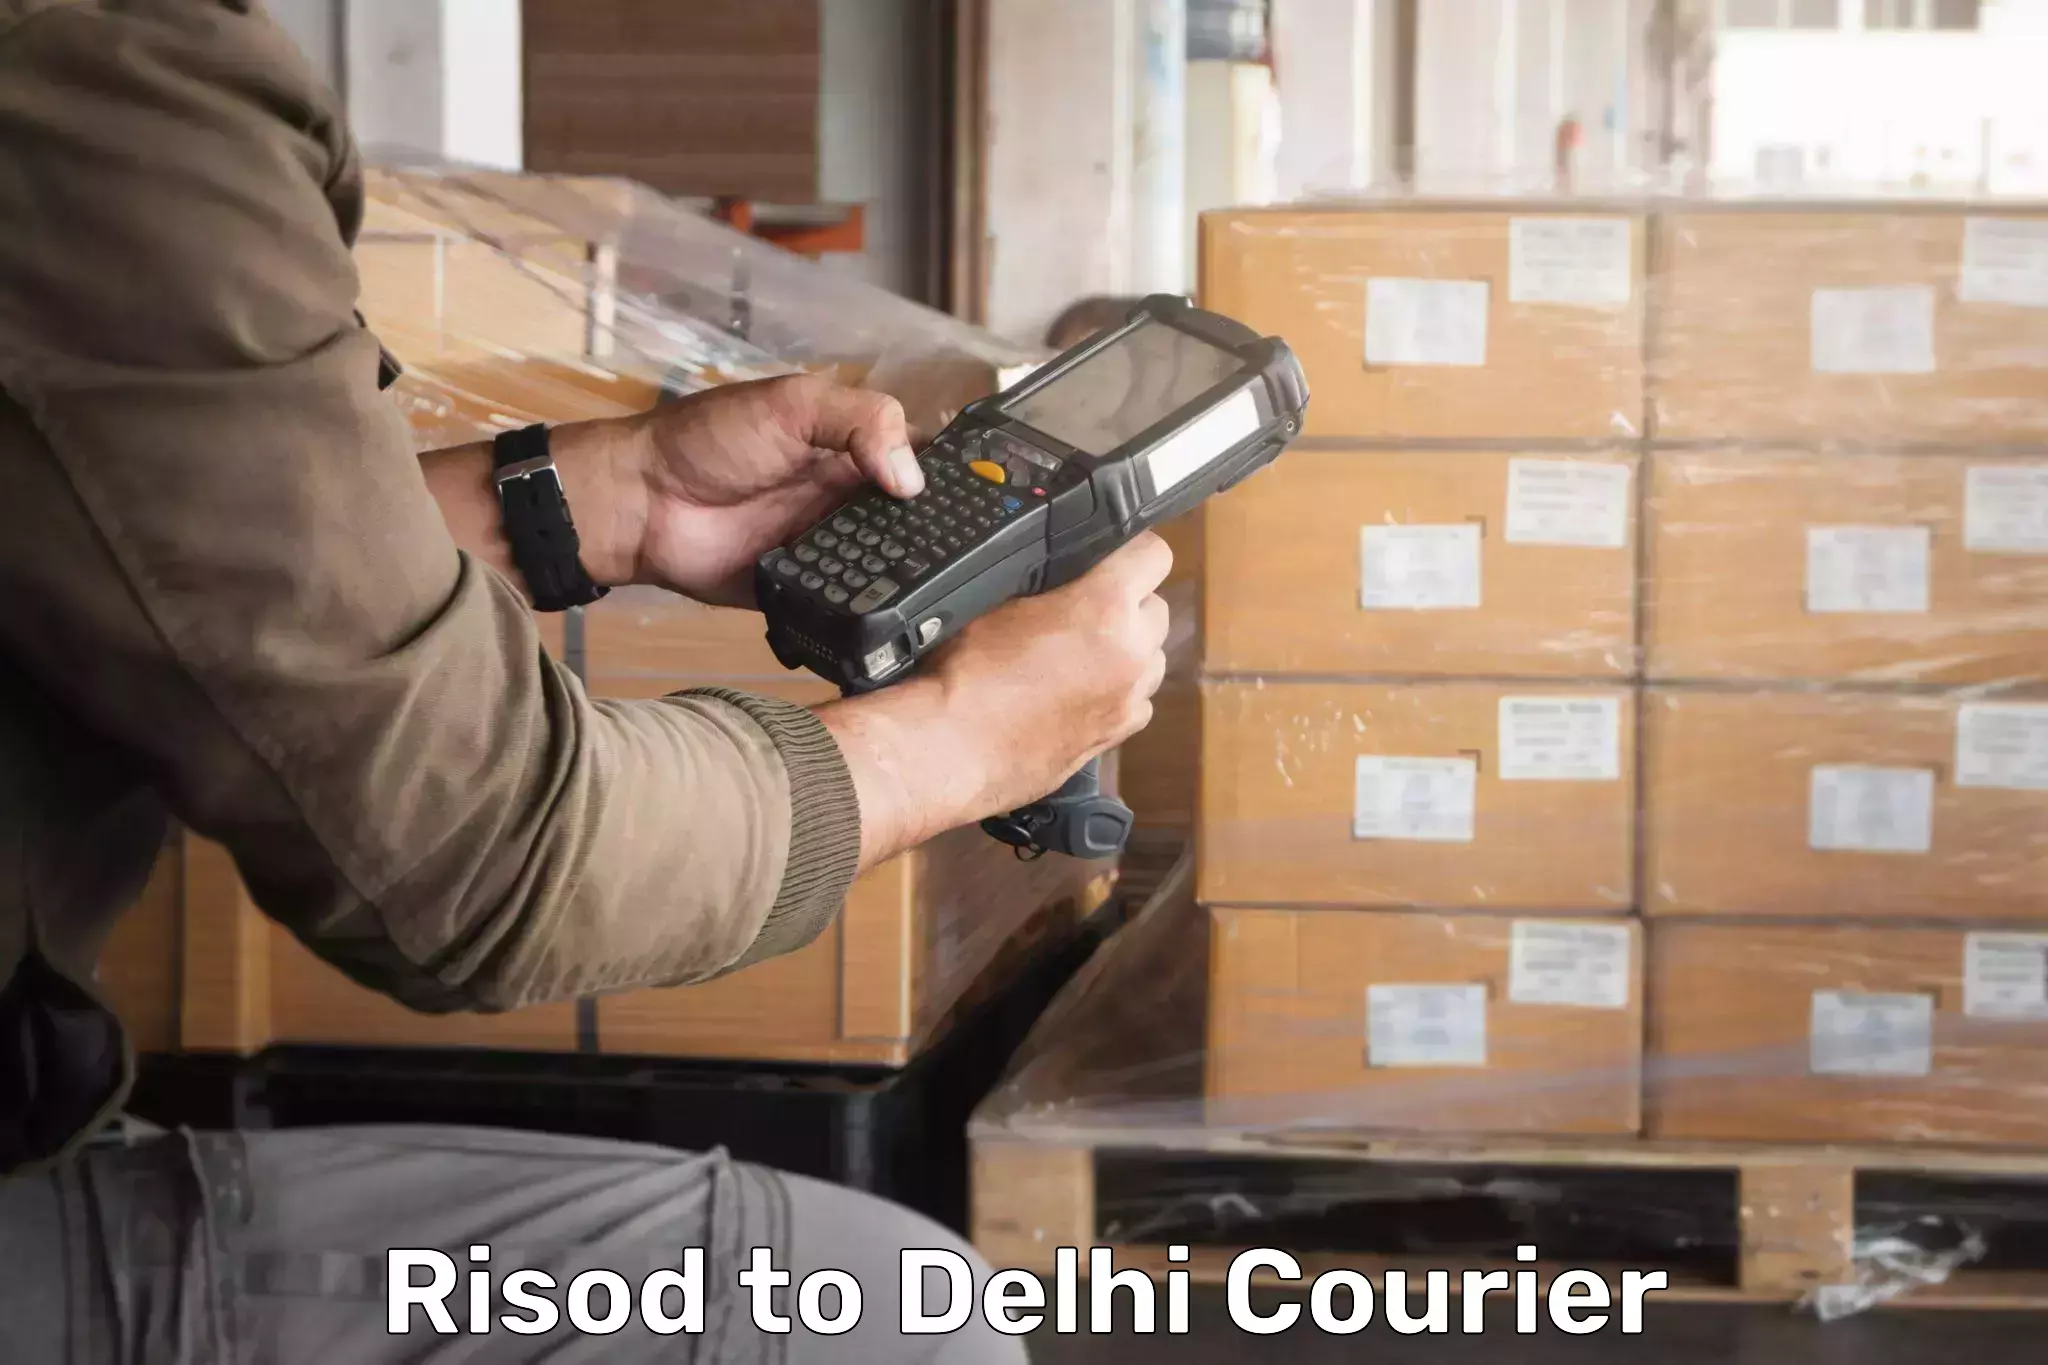 Nationwide courier service Risod to Delhi